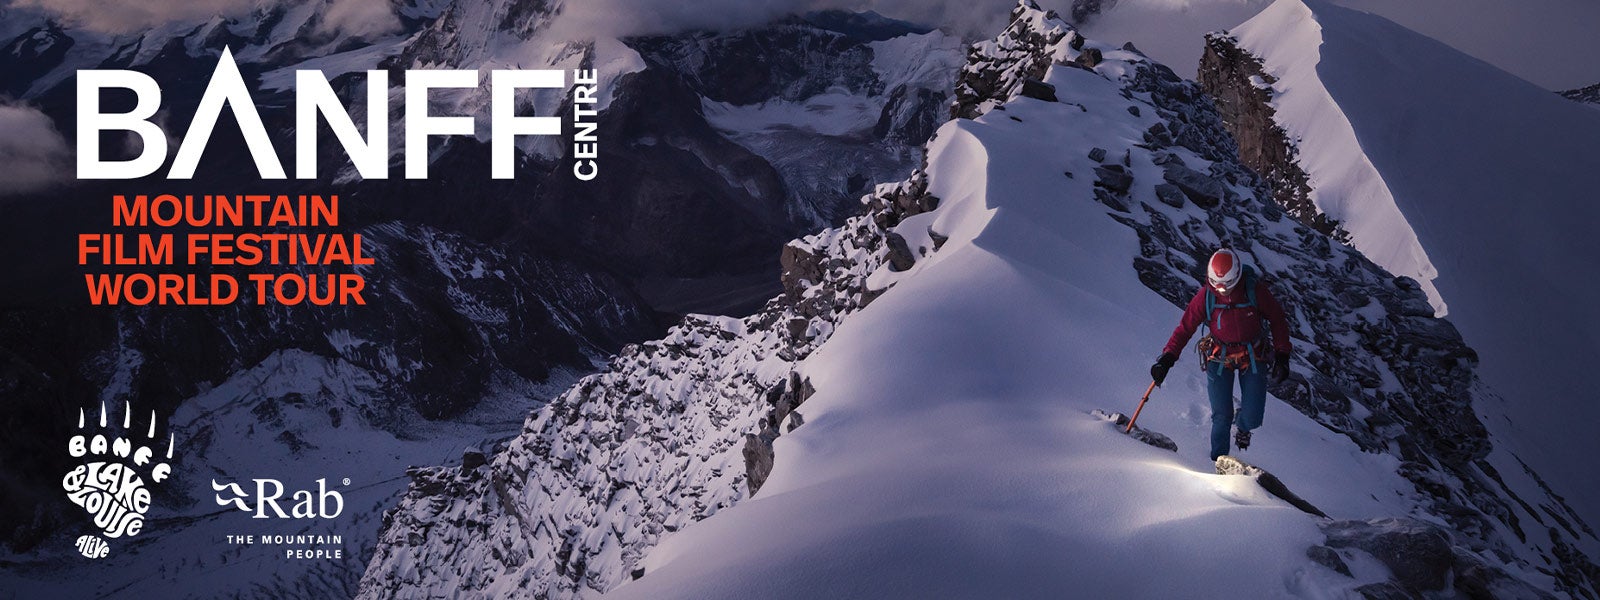 Locandina Banff Mountain Film Festival World Tour 2019/2020